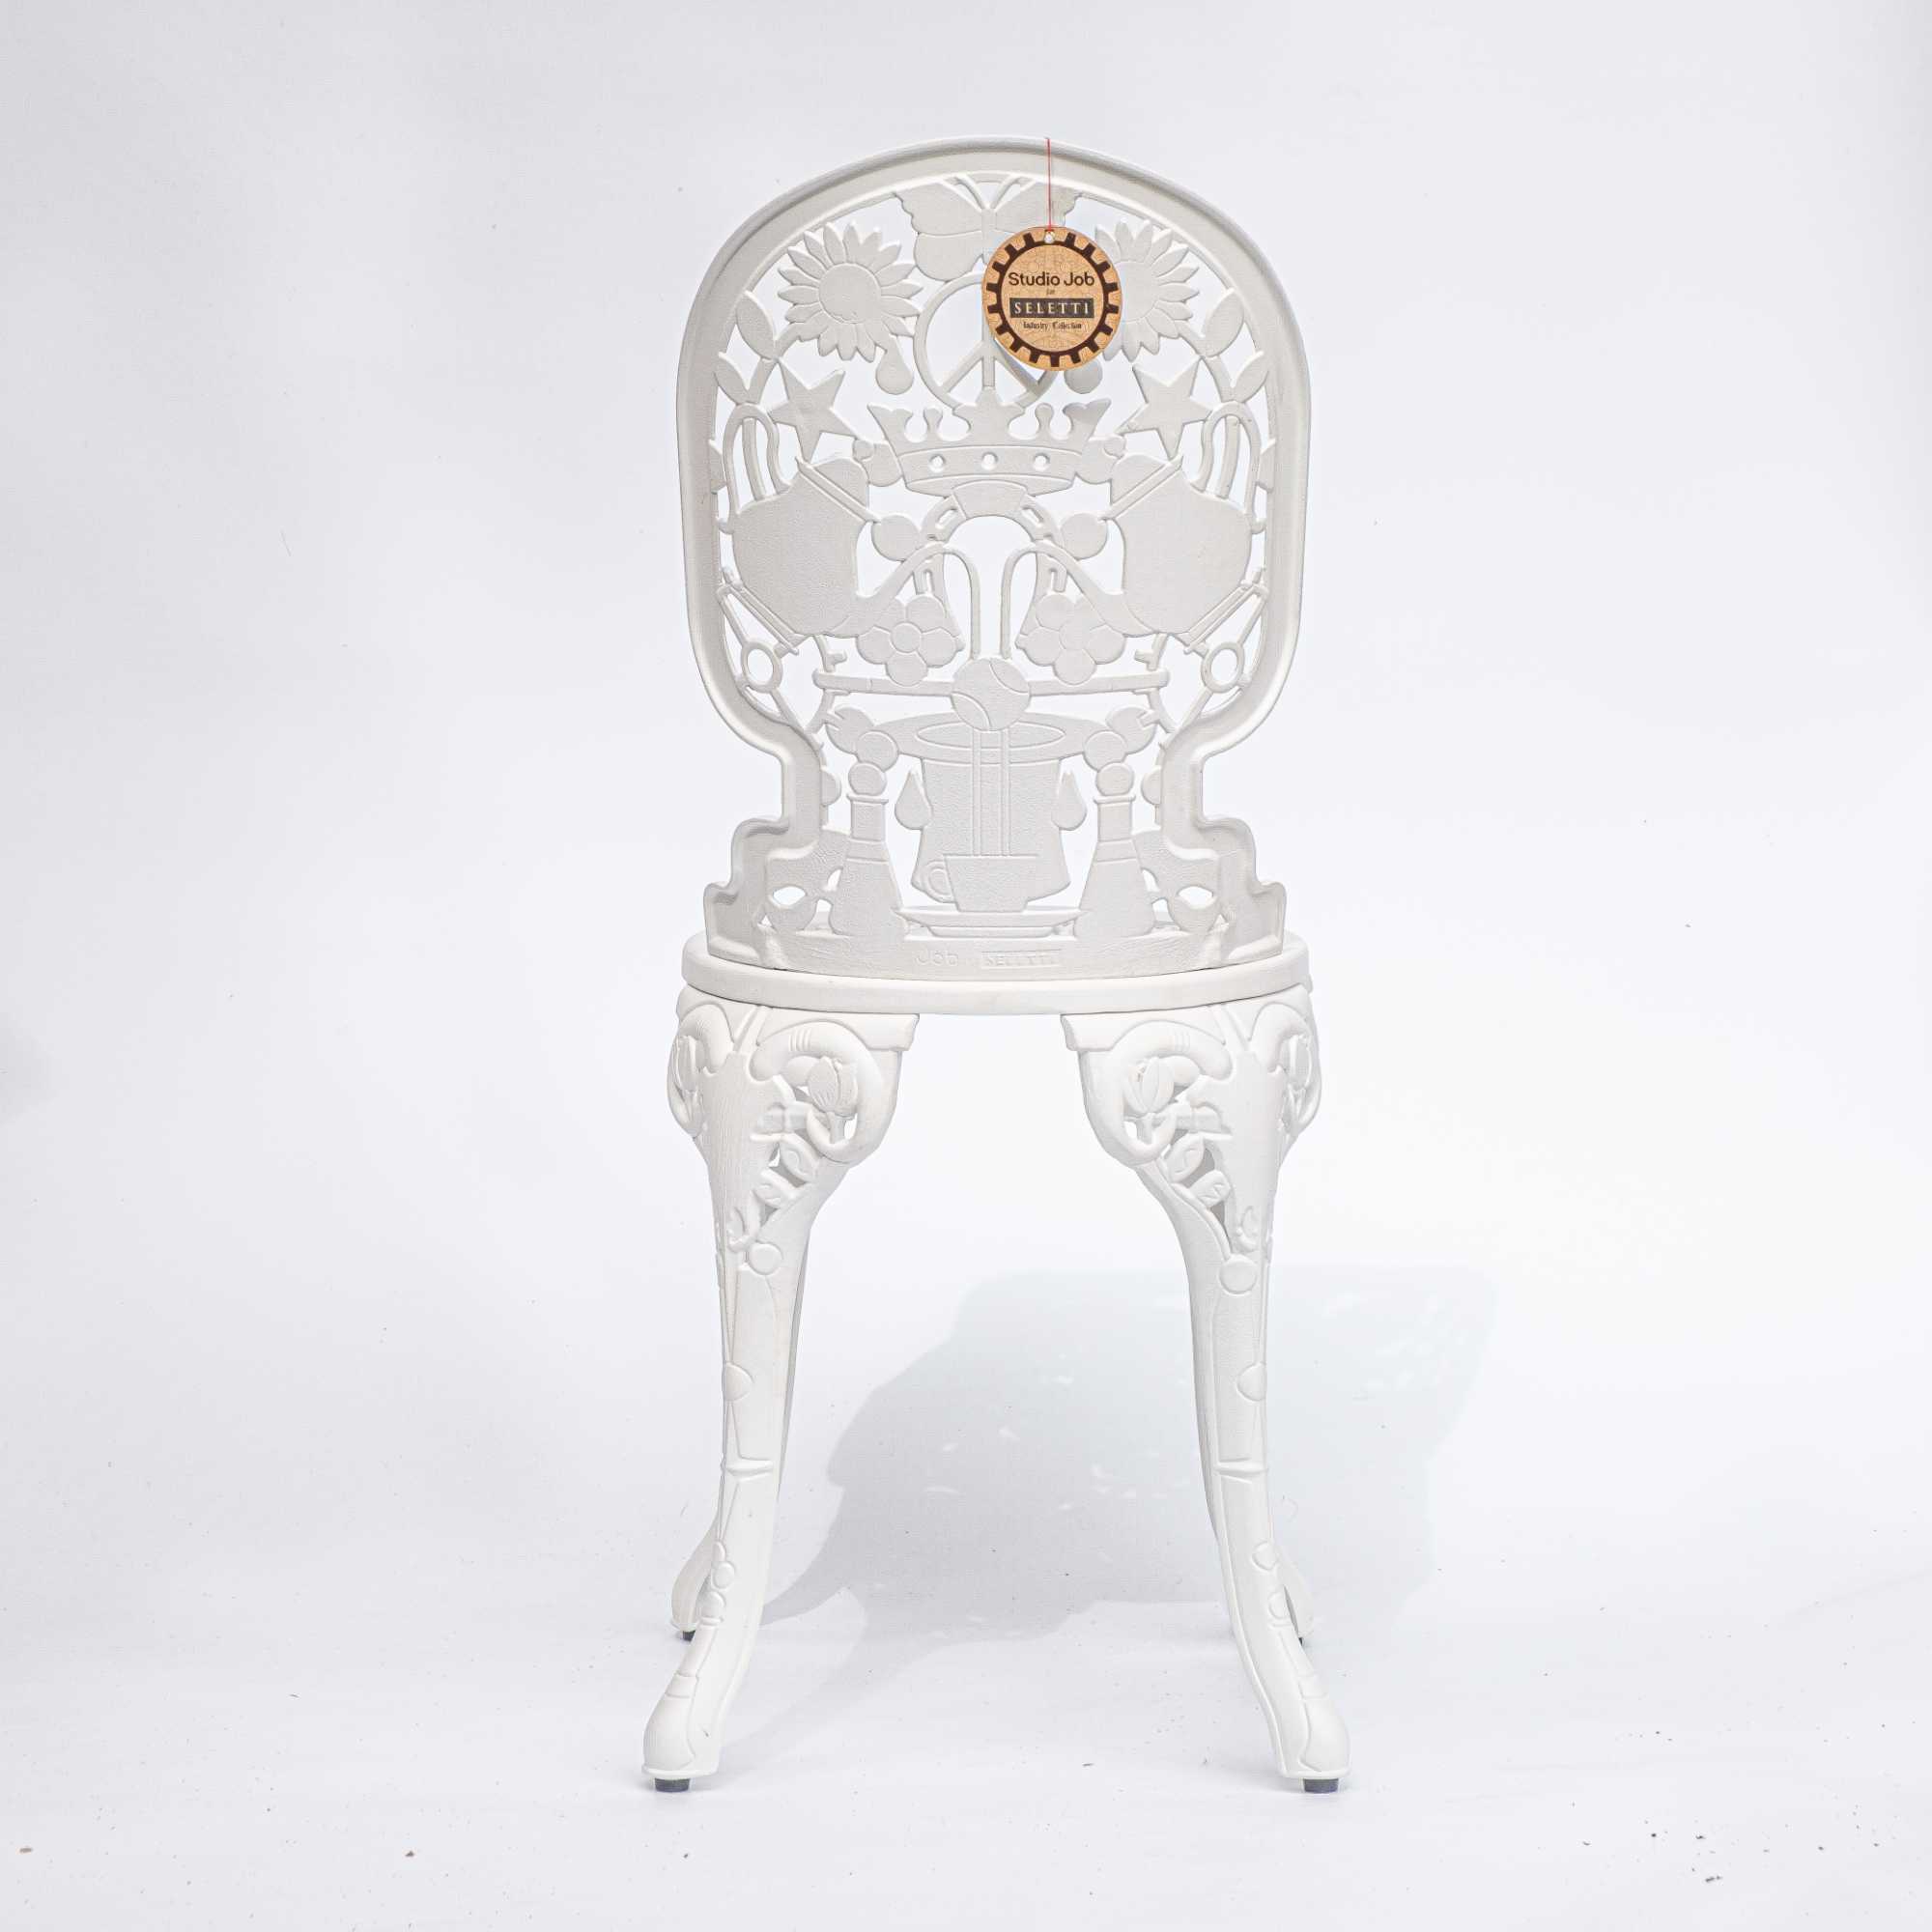 refurblished | Seletti Industry Aluminium Garden Chair, White